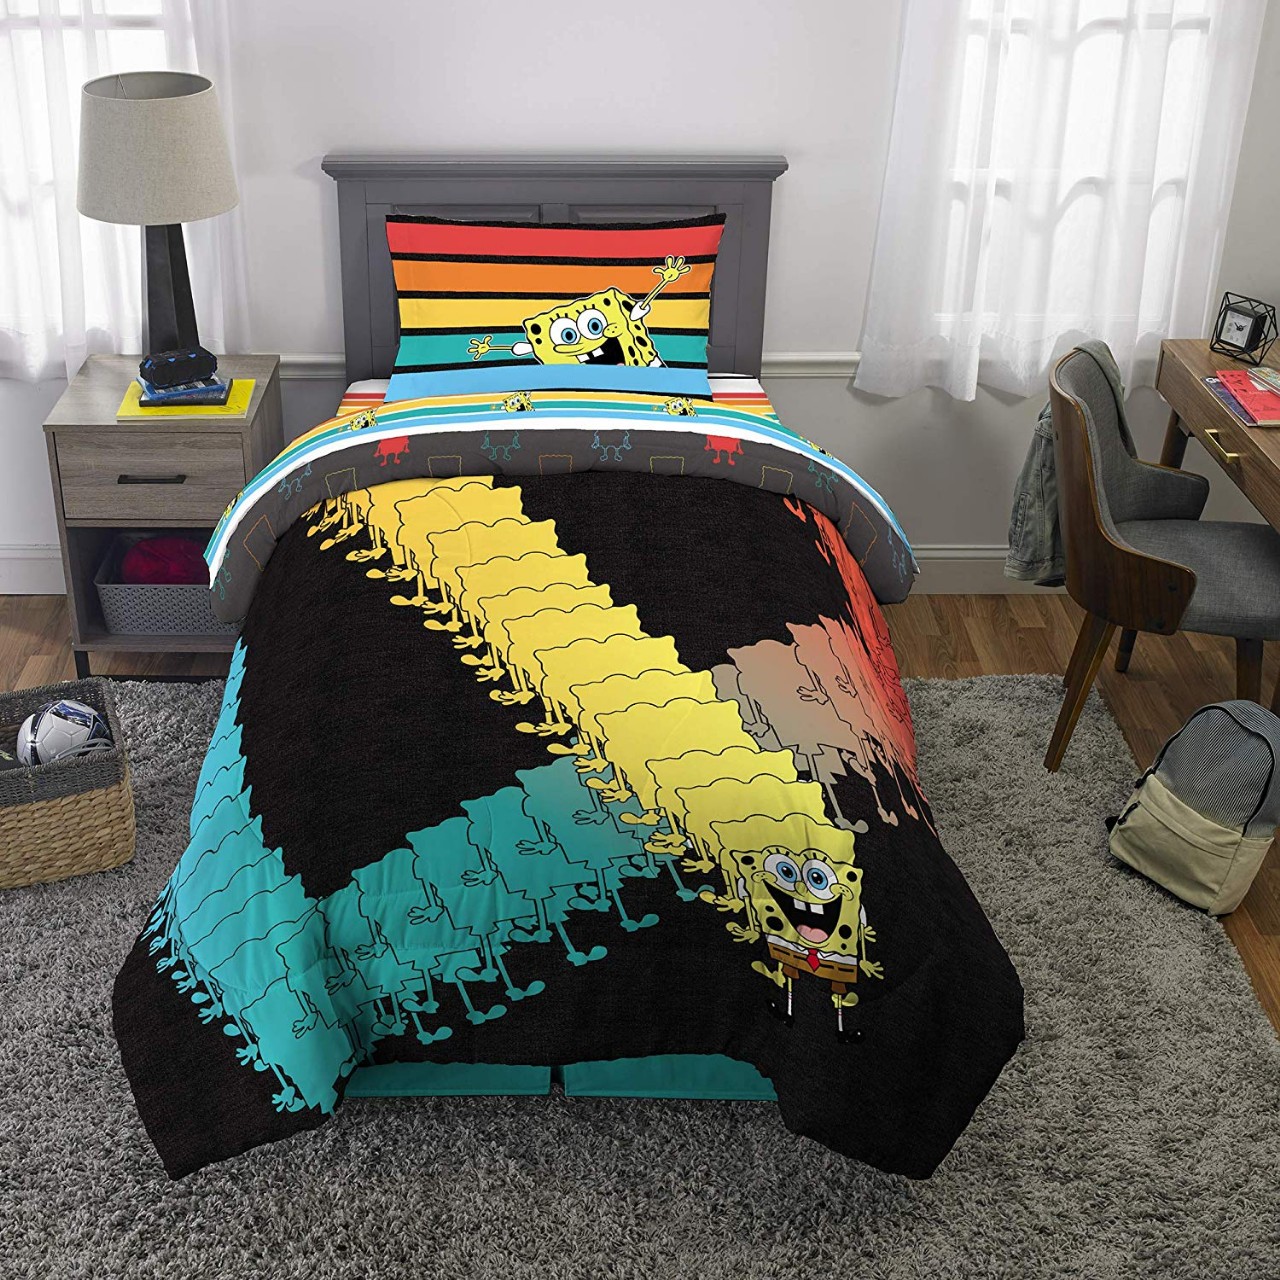 Franco Kids Bedding Super Soft Microfiber Comforter and Sheet Set, 4 Piece Twin Size, Spongebob